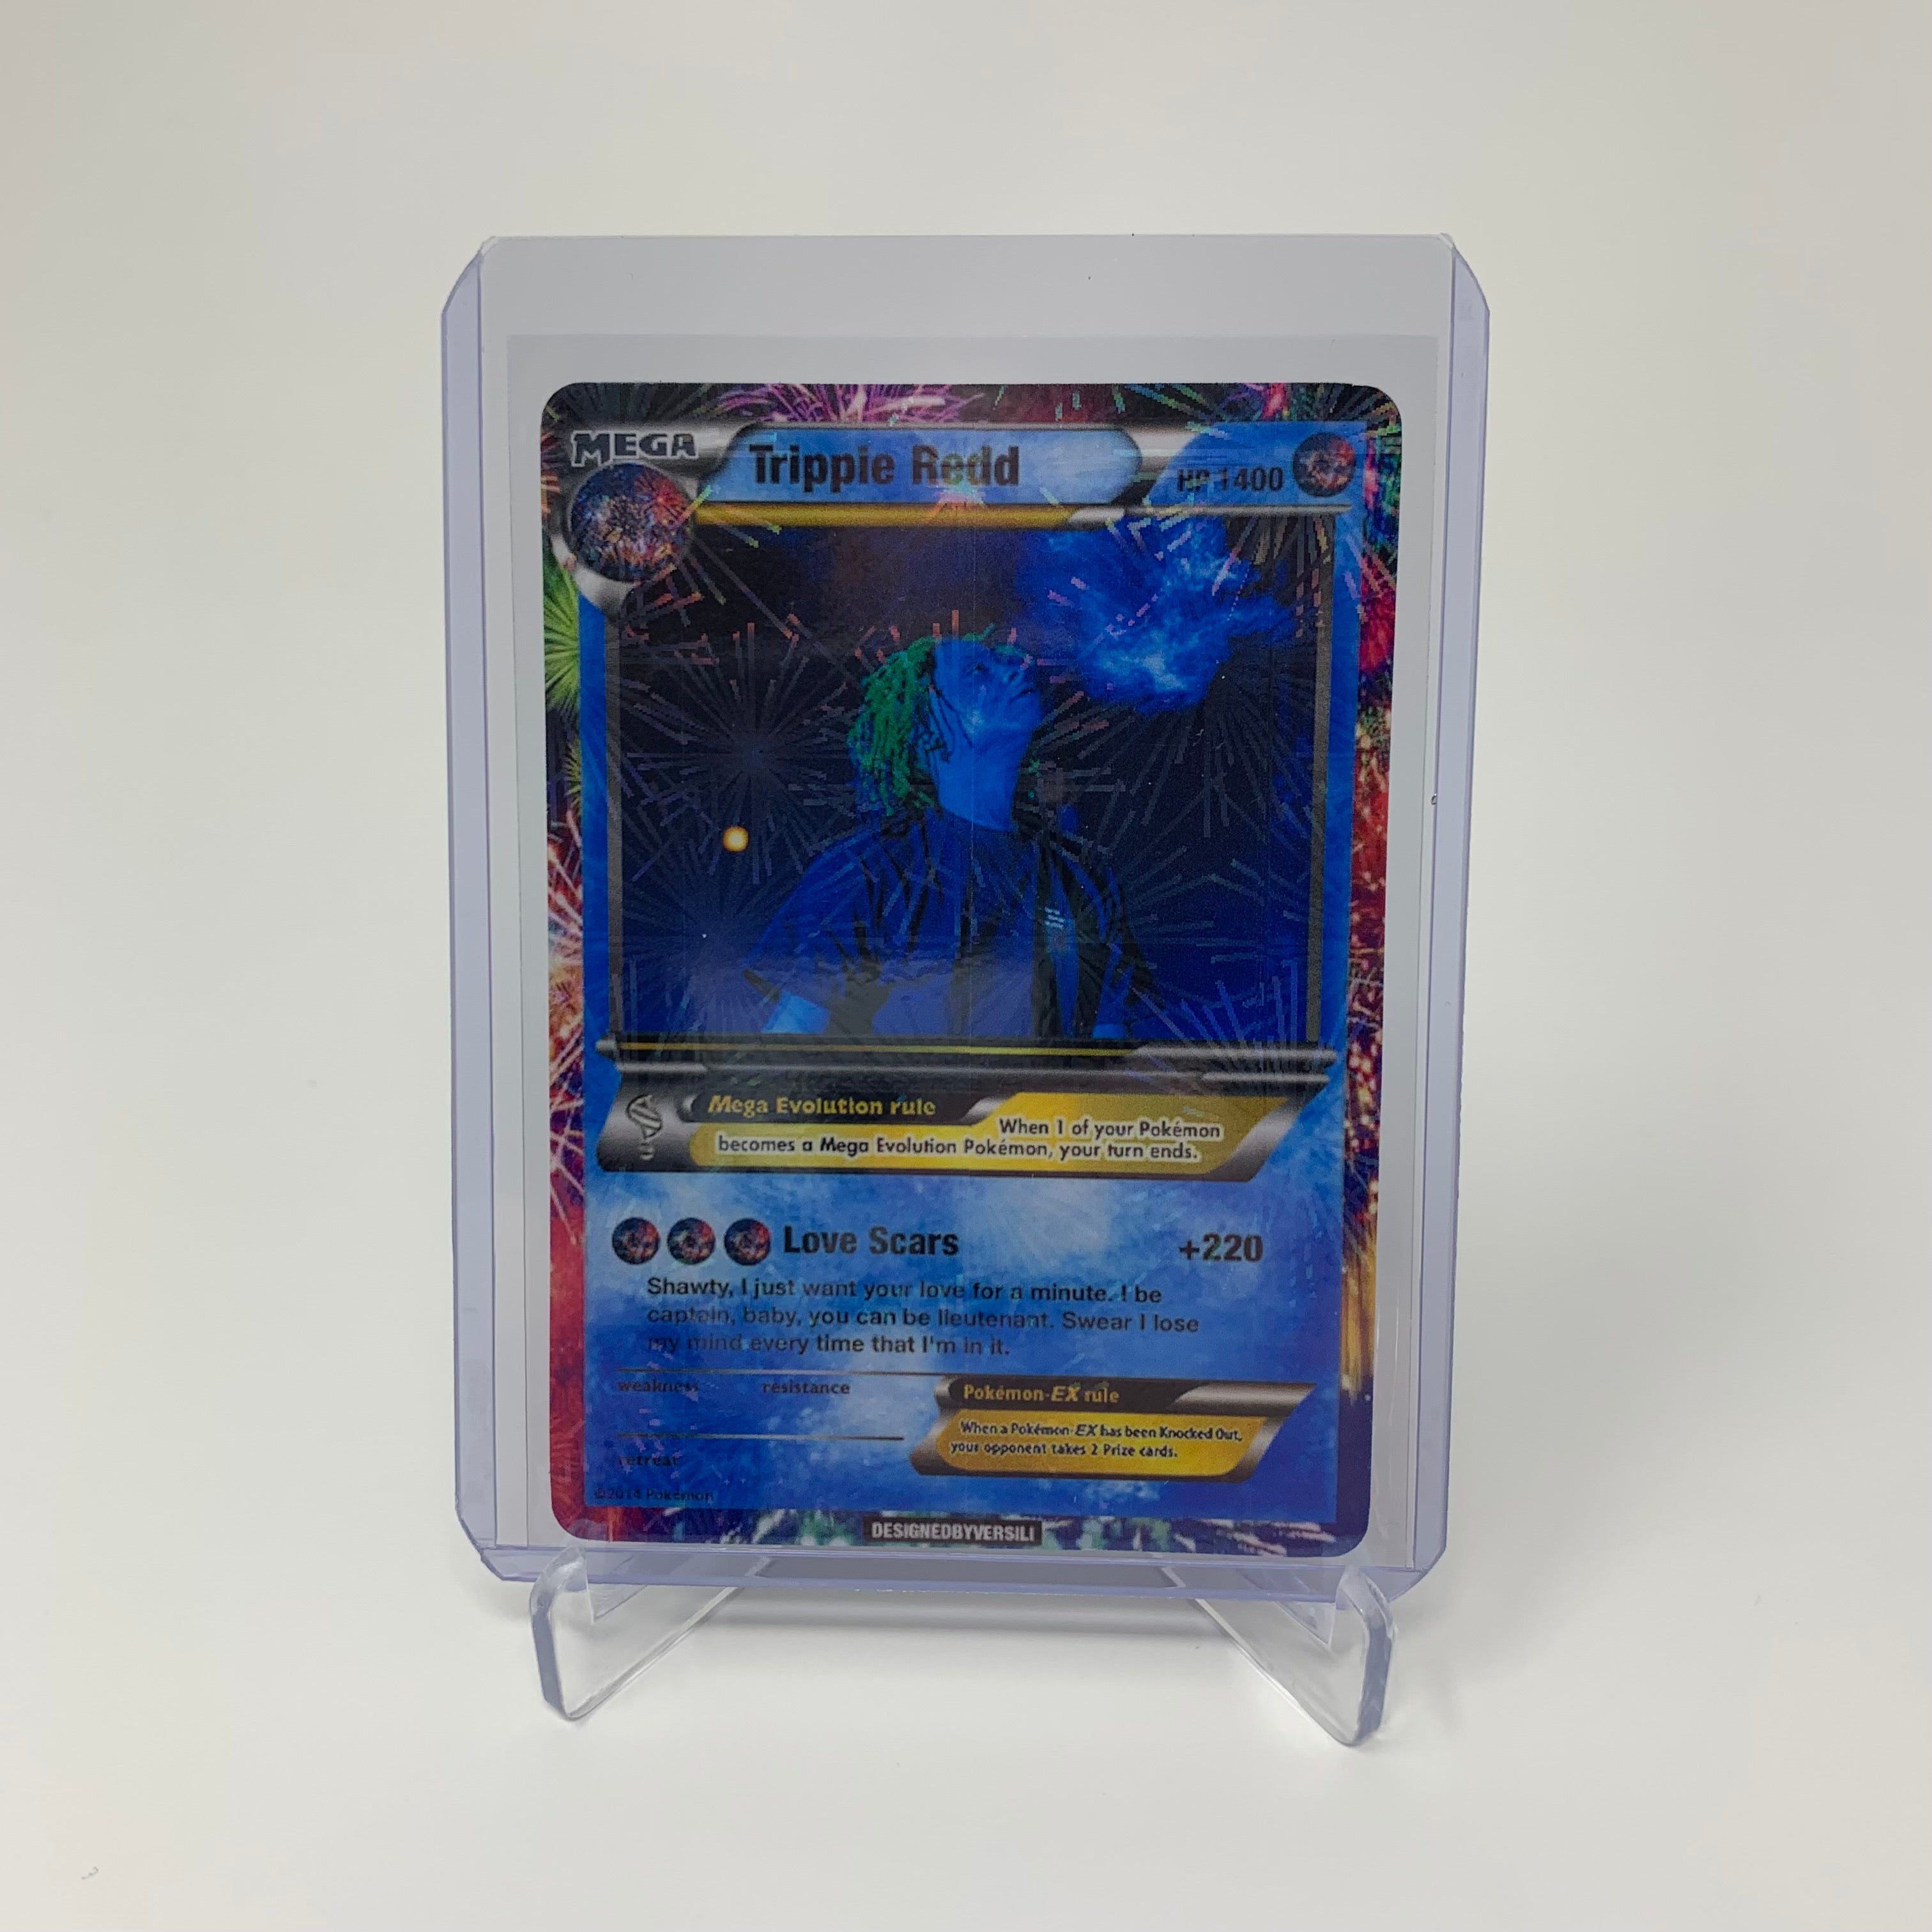 Trippie Redd Pokémon Card (4th of July)